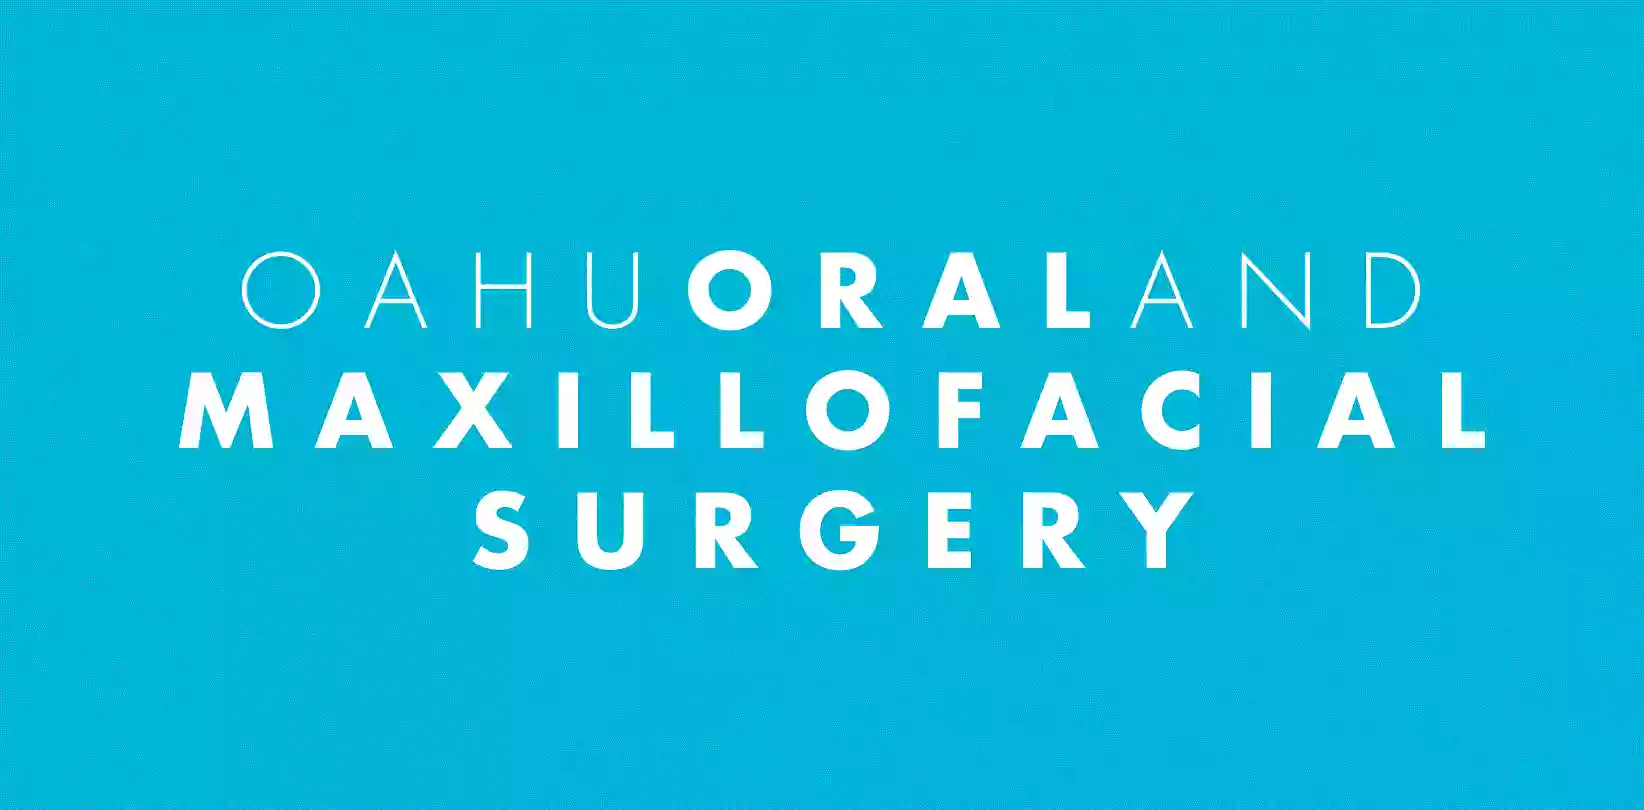 Oahu Oral and Maxillofacial Surgery, Jeremy Hannon DMD